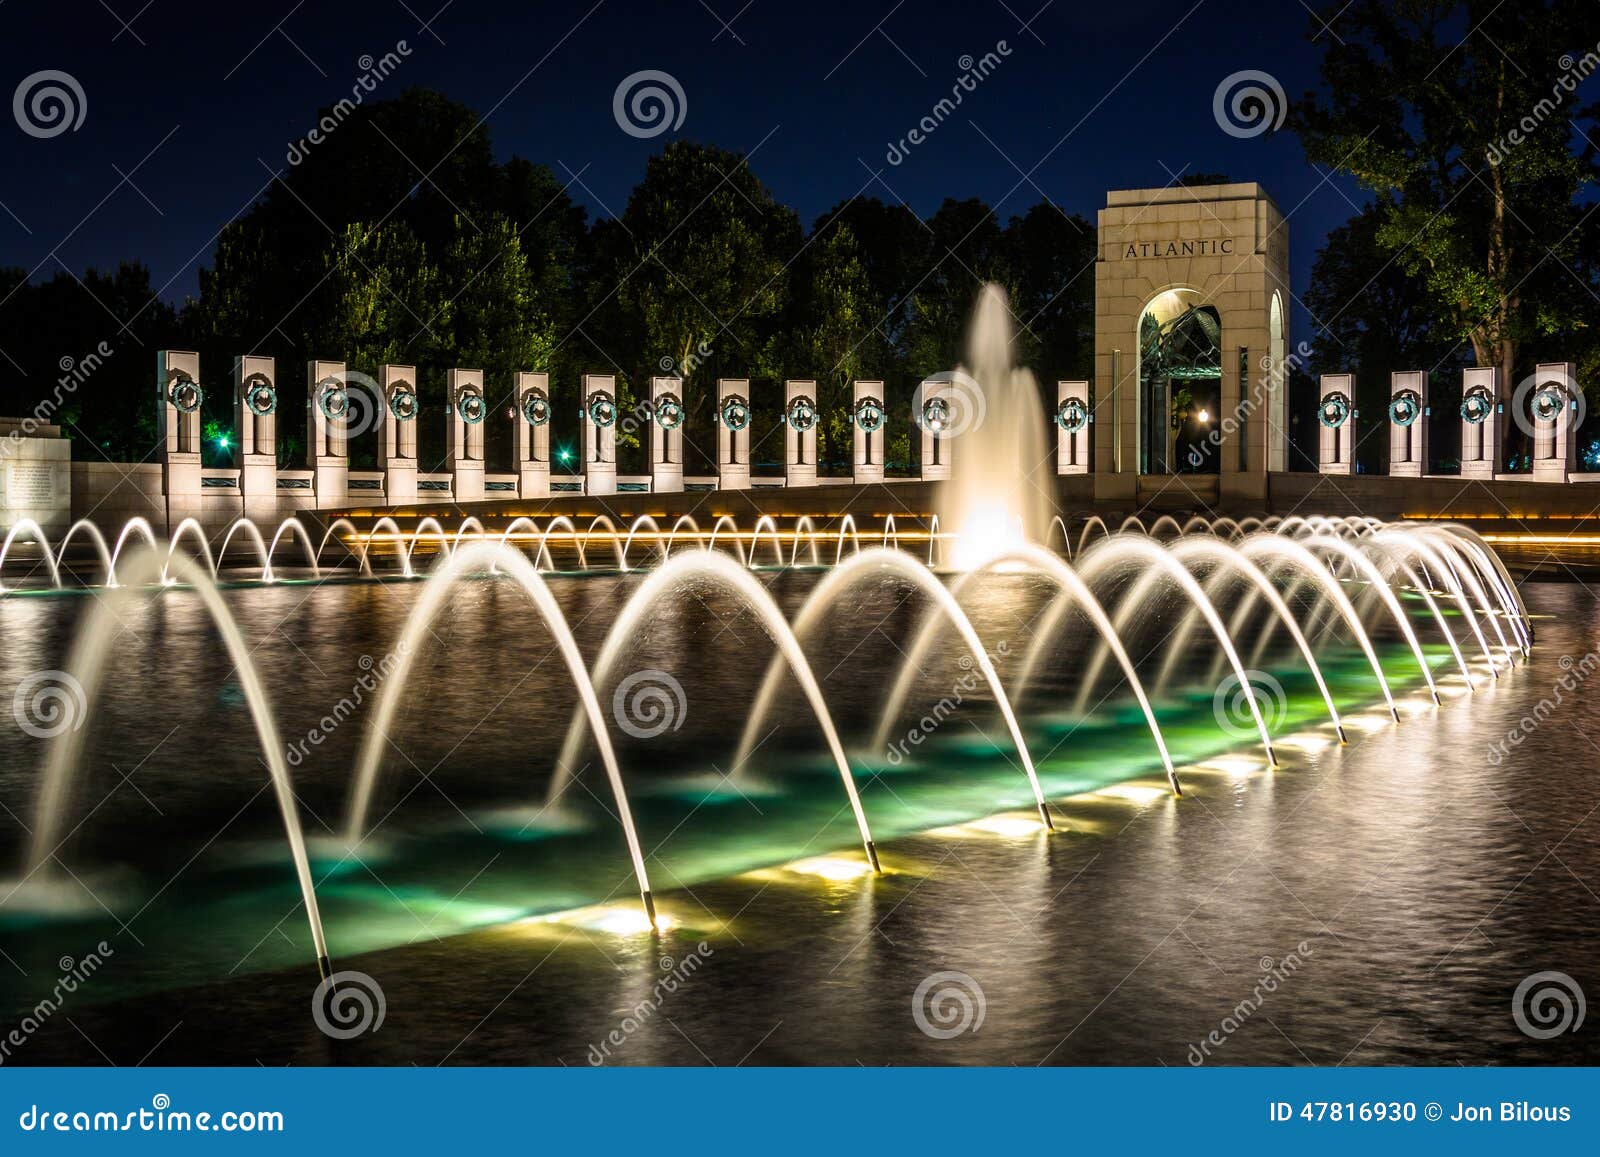 the national world war ii memorial fountains at night at the nat